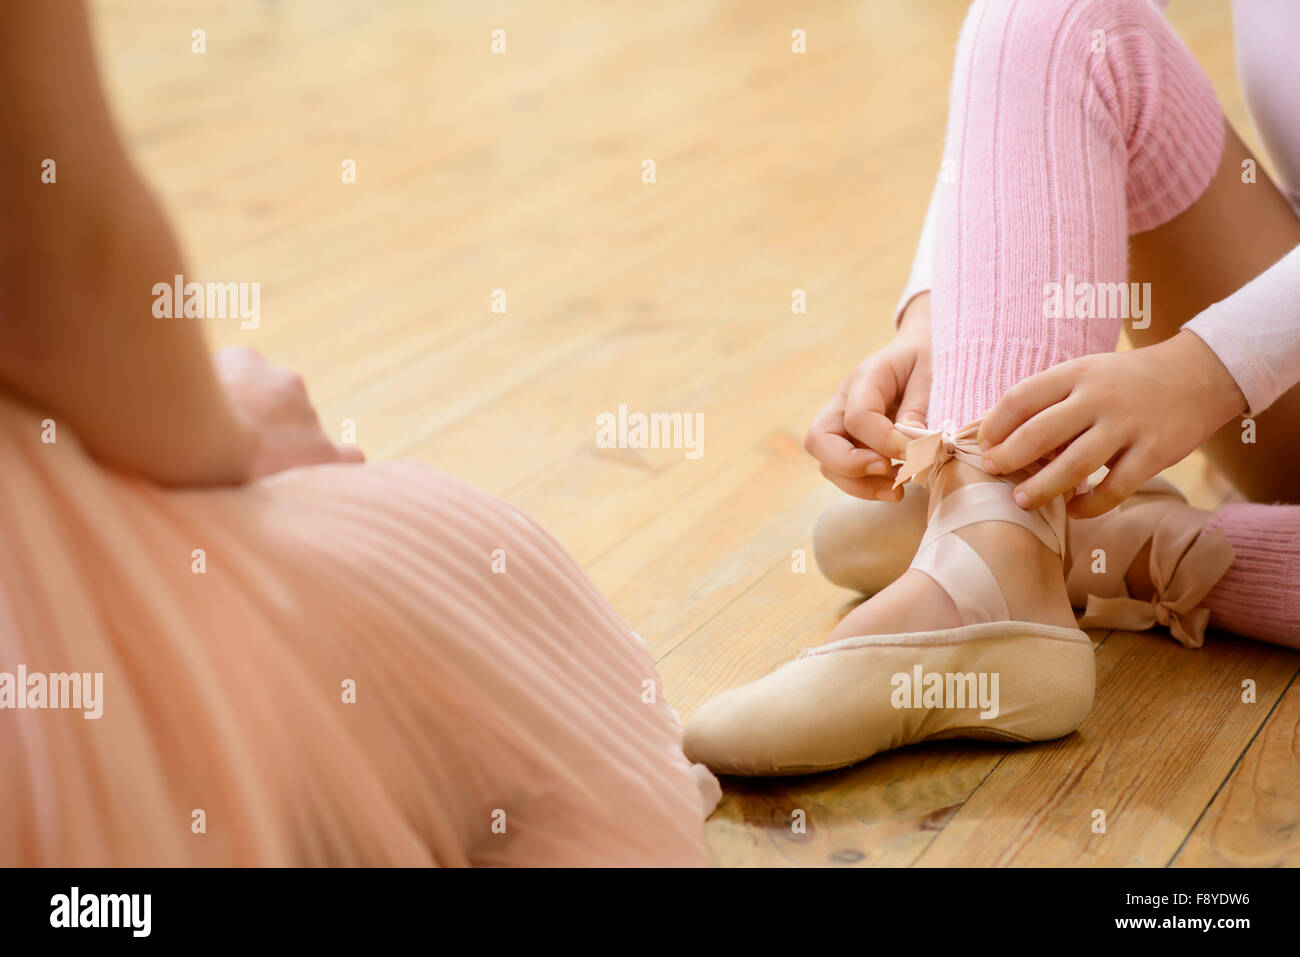 little girl ballet shoes